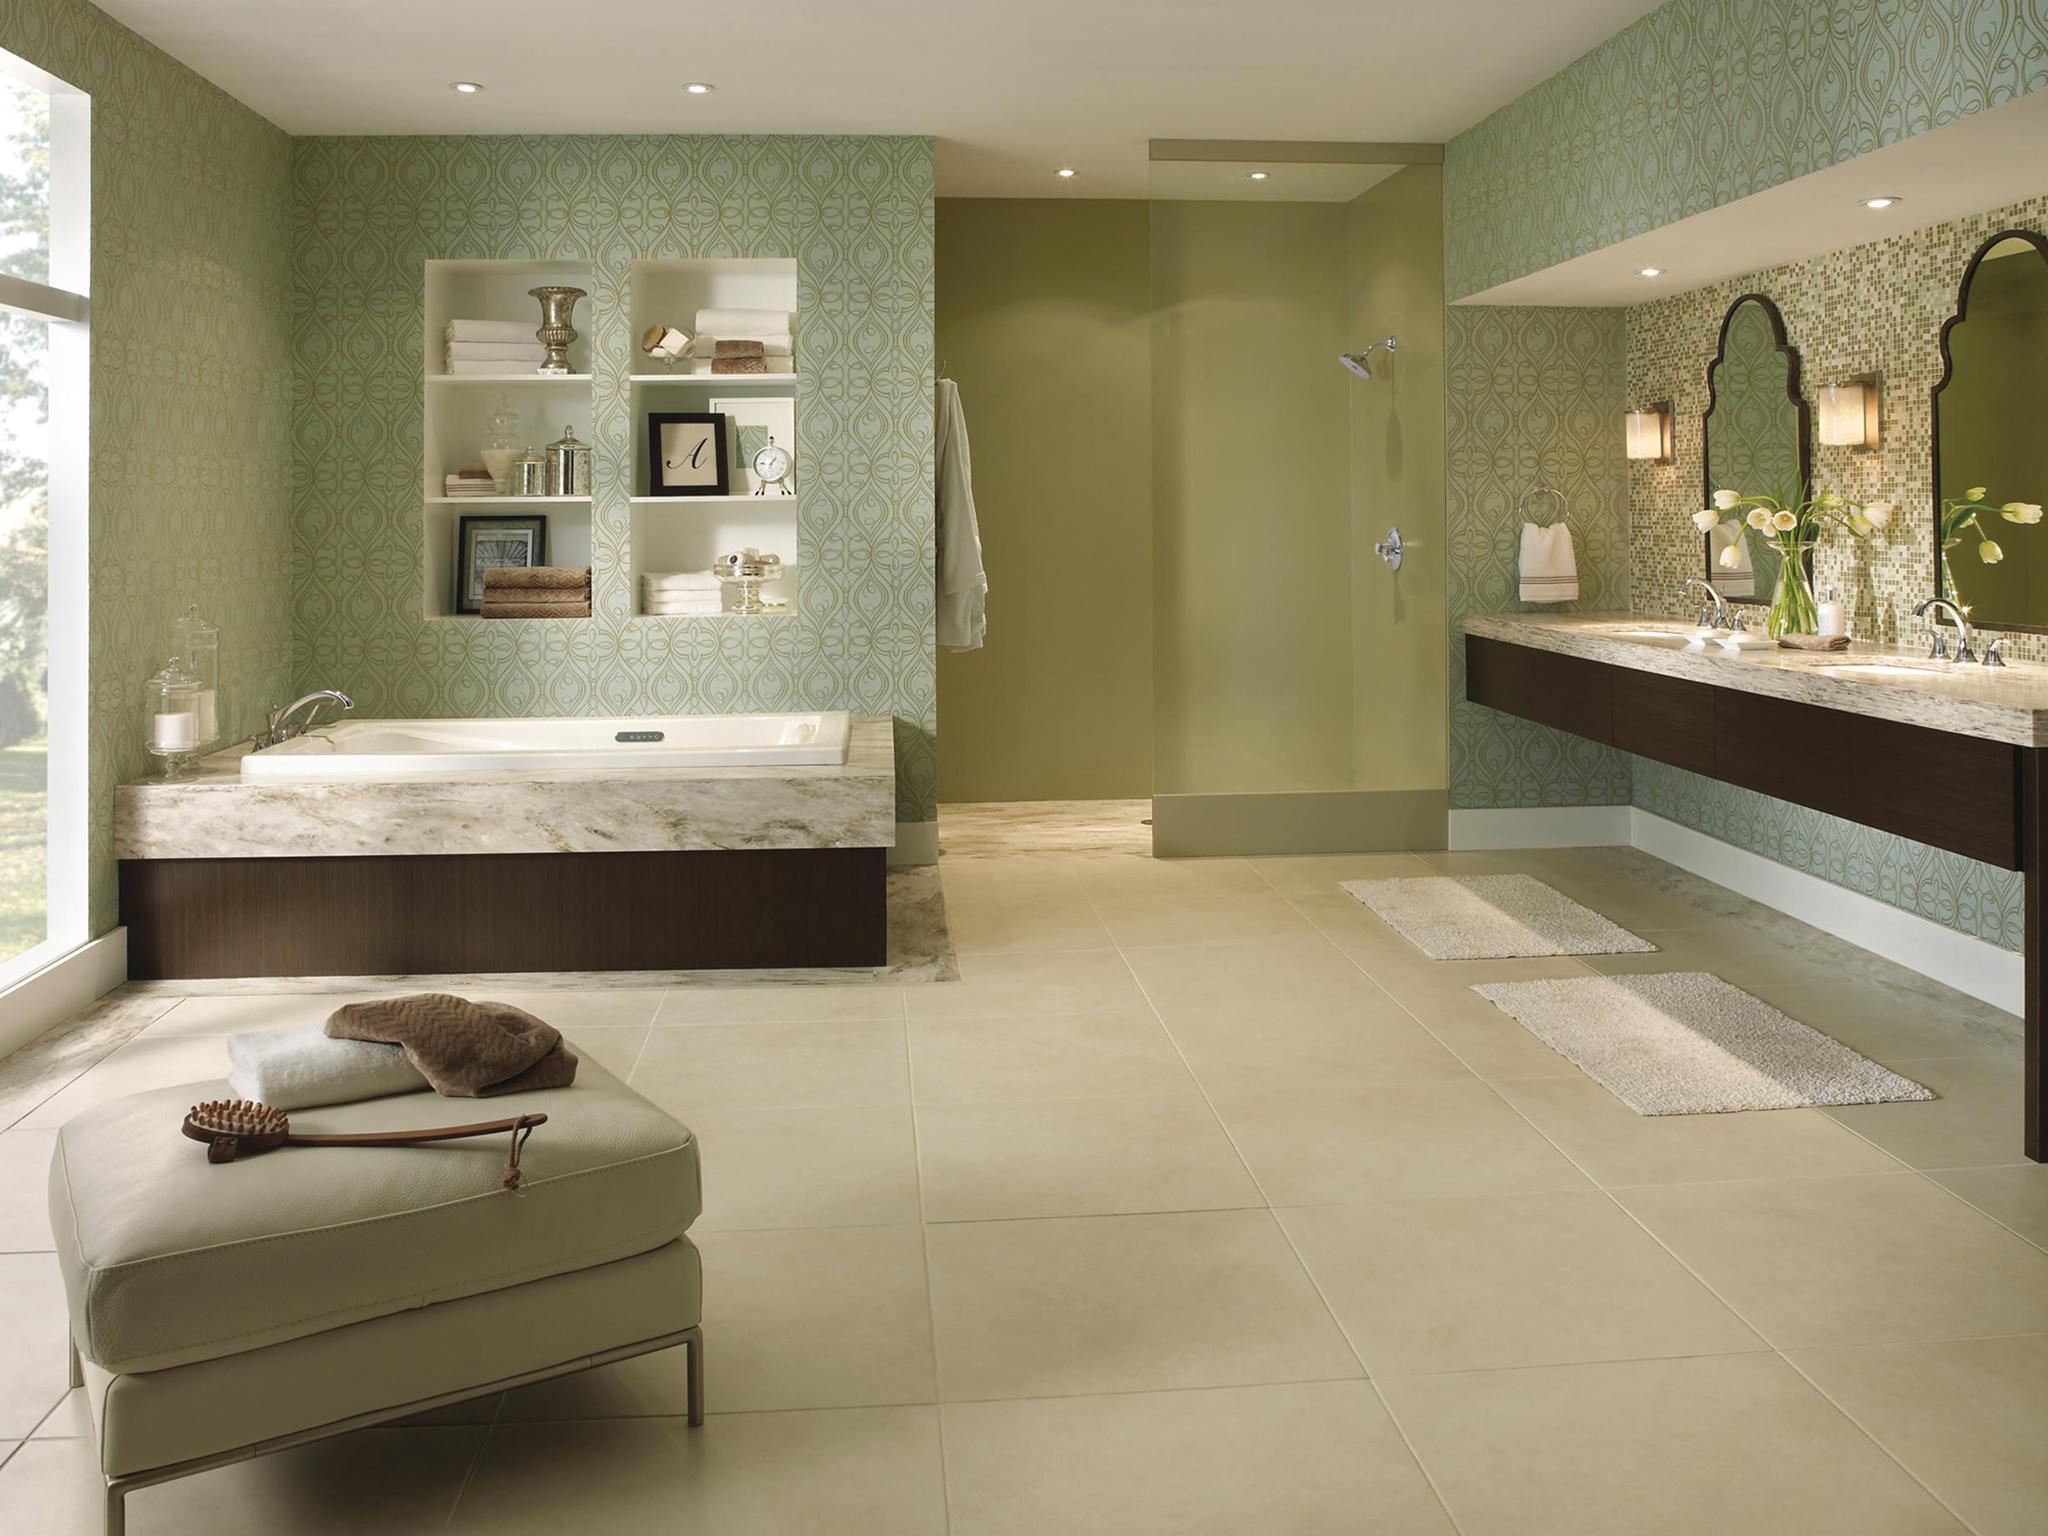 “Bathrooms have become even more sumptuous,” says designer Nate Berkus